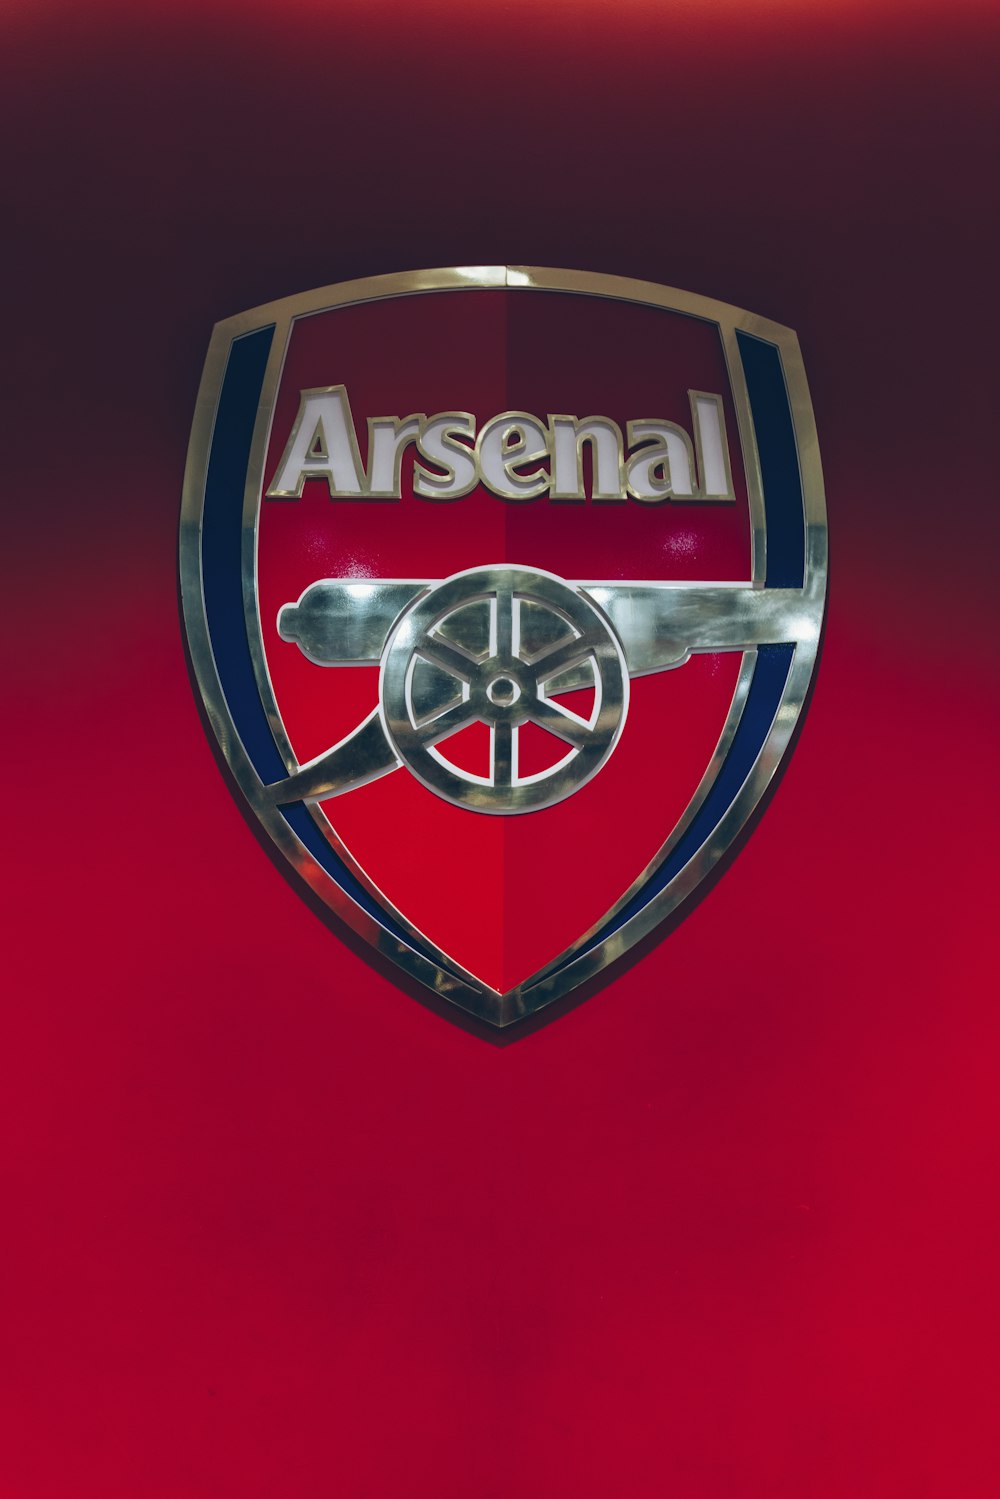 red Arsenal logo photo – Free London Image on Unsplash